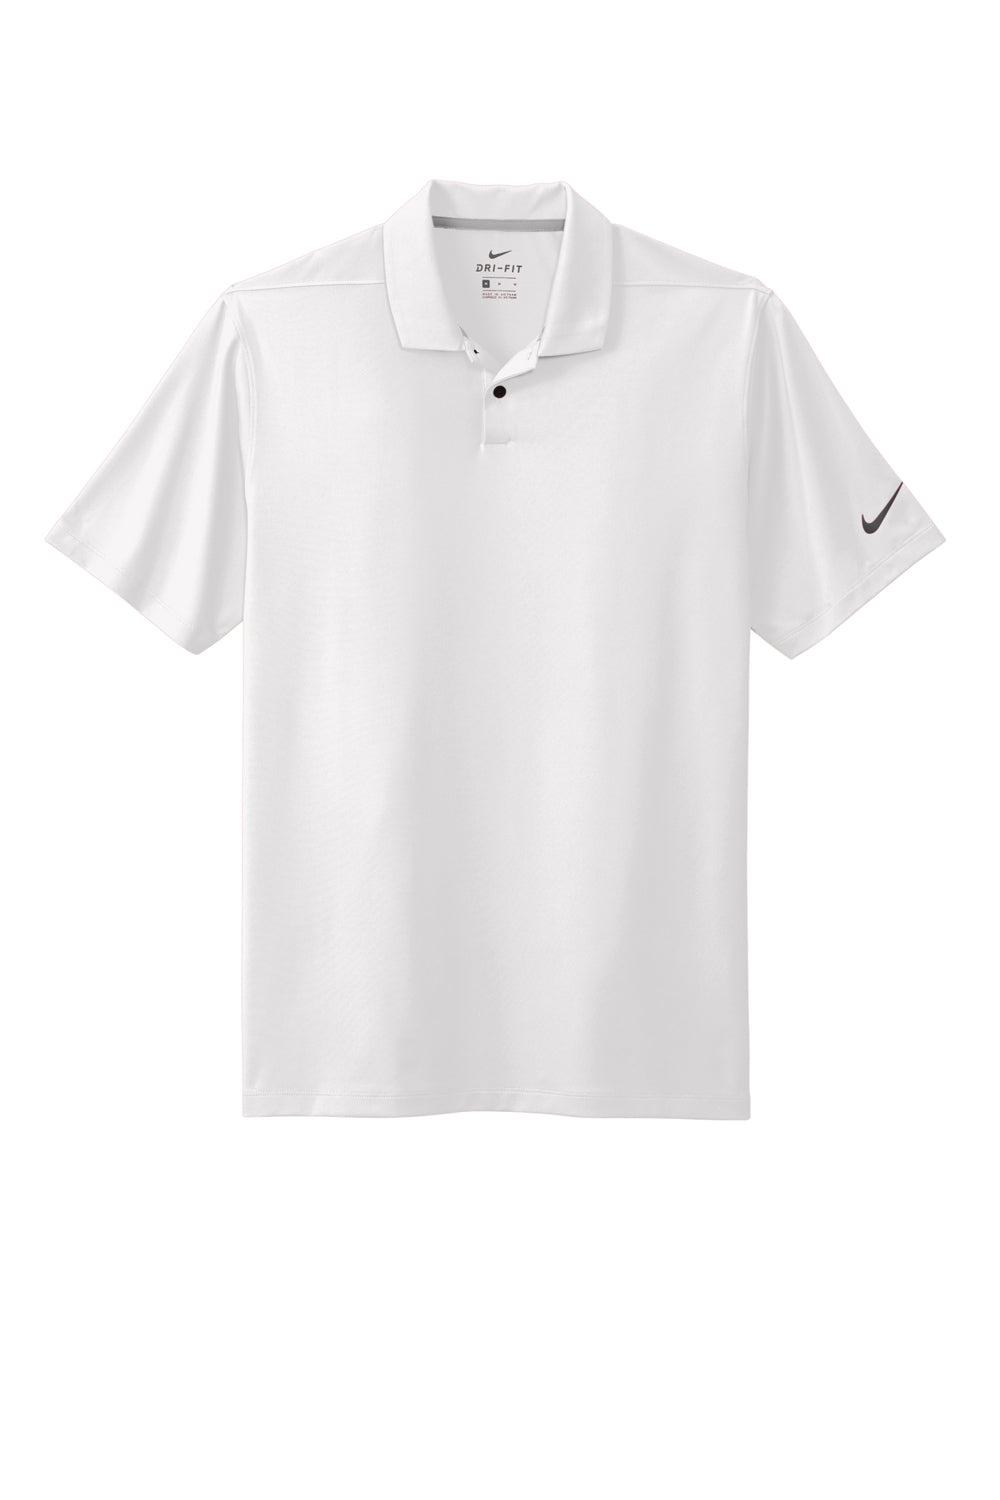 Nike NKDC2108 Mens Vapor Dri-Fit Moisture Wicking Short Sleeve Polo Shirt White Flat Front